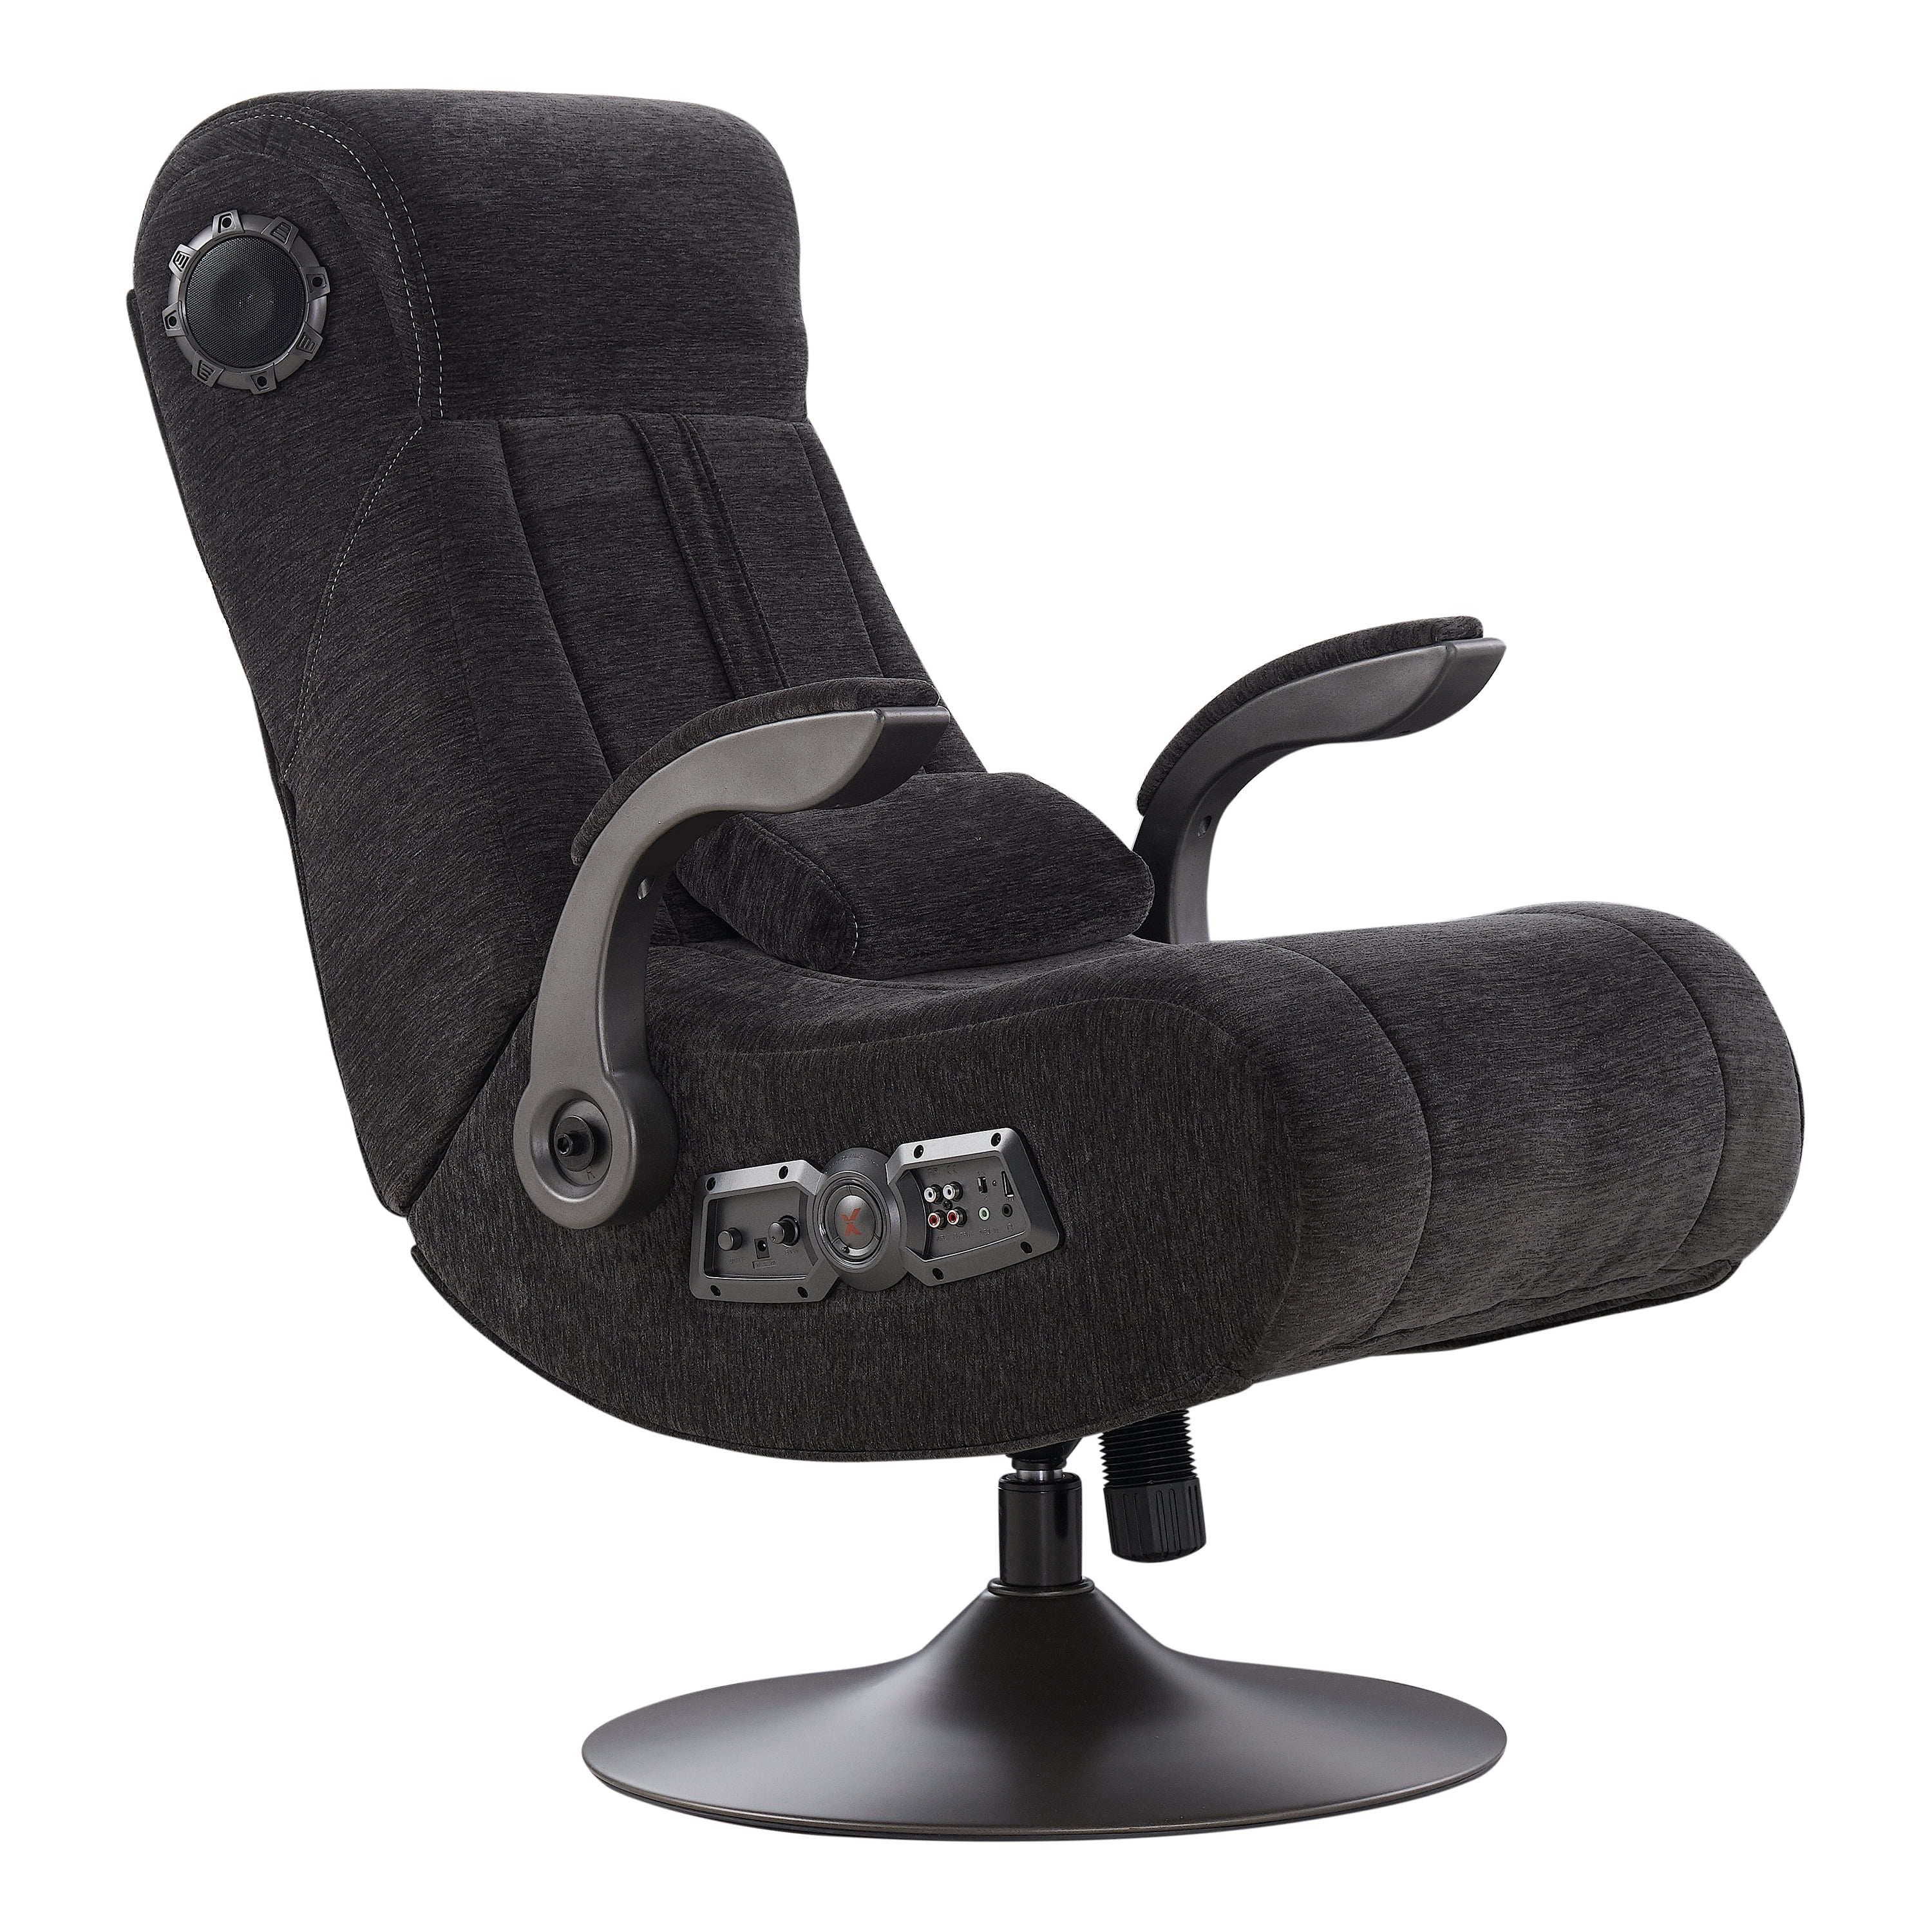 X Rocker 2.1 Pedestal Gaming Chair Rocker with Bluetooth